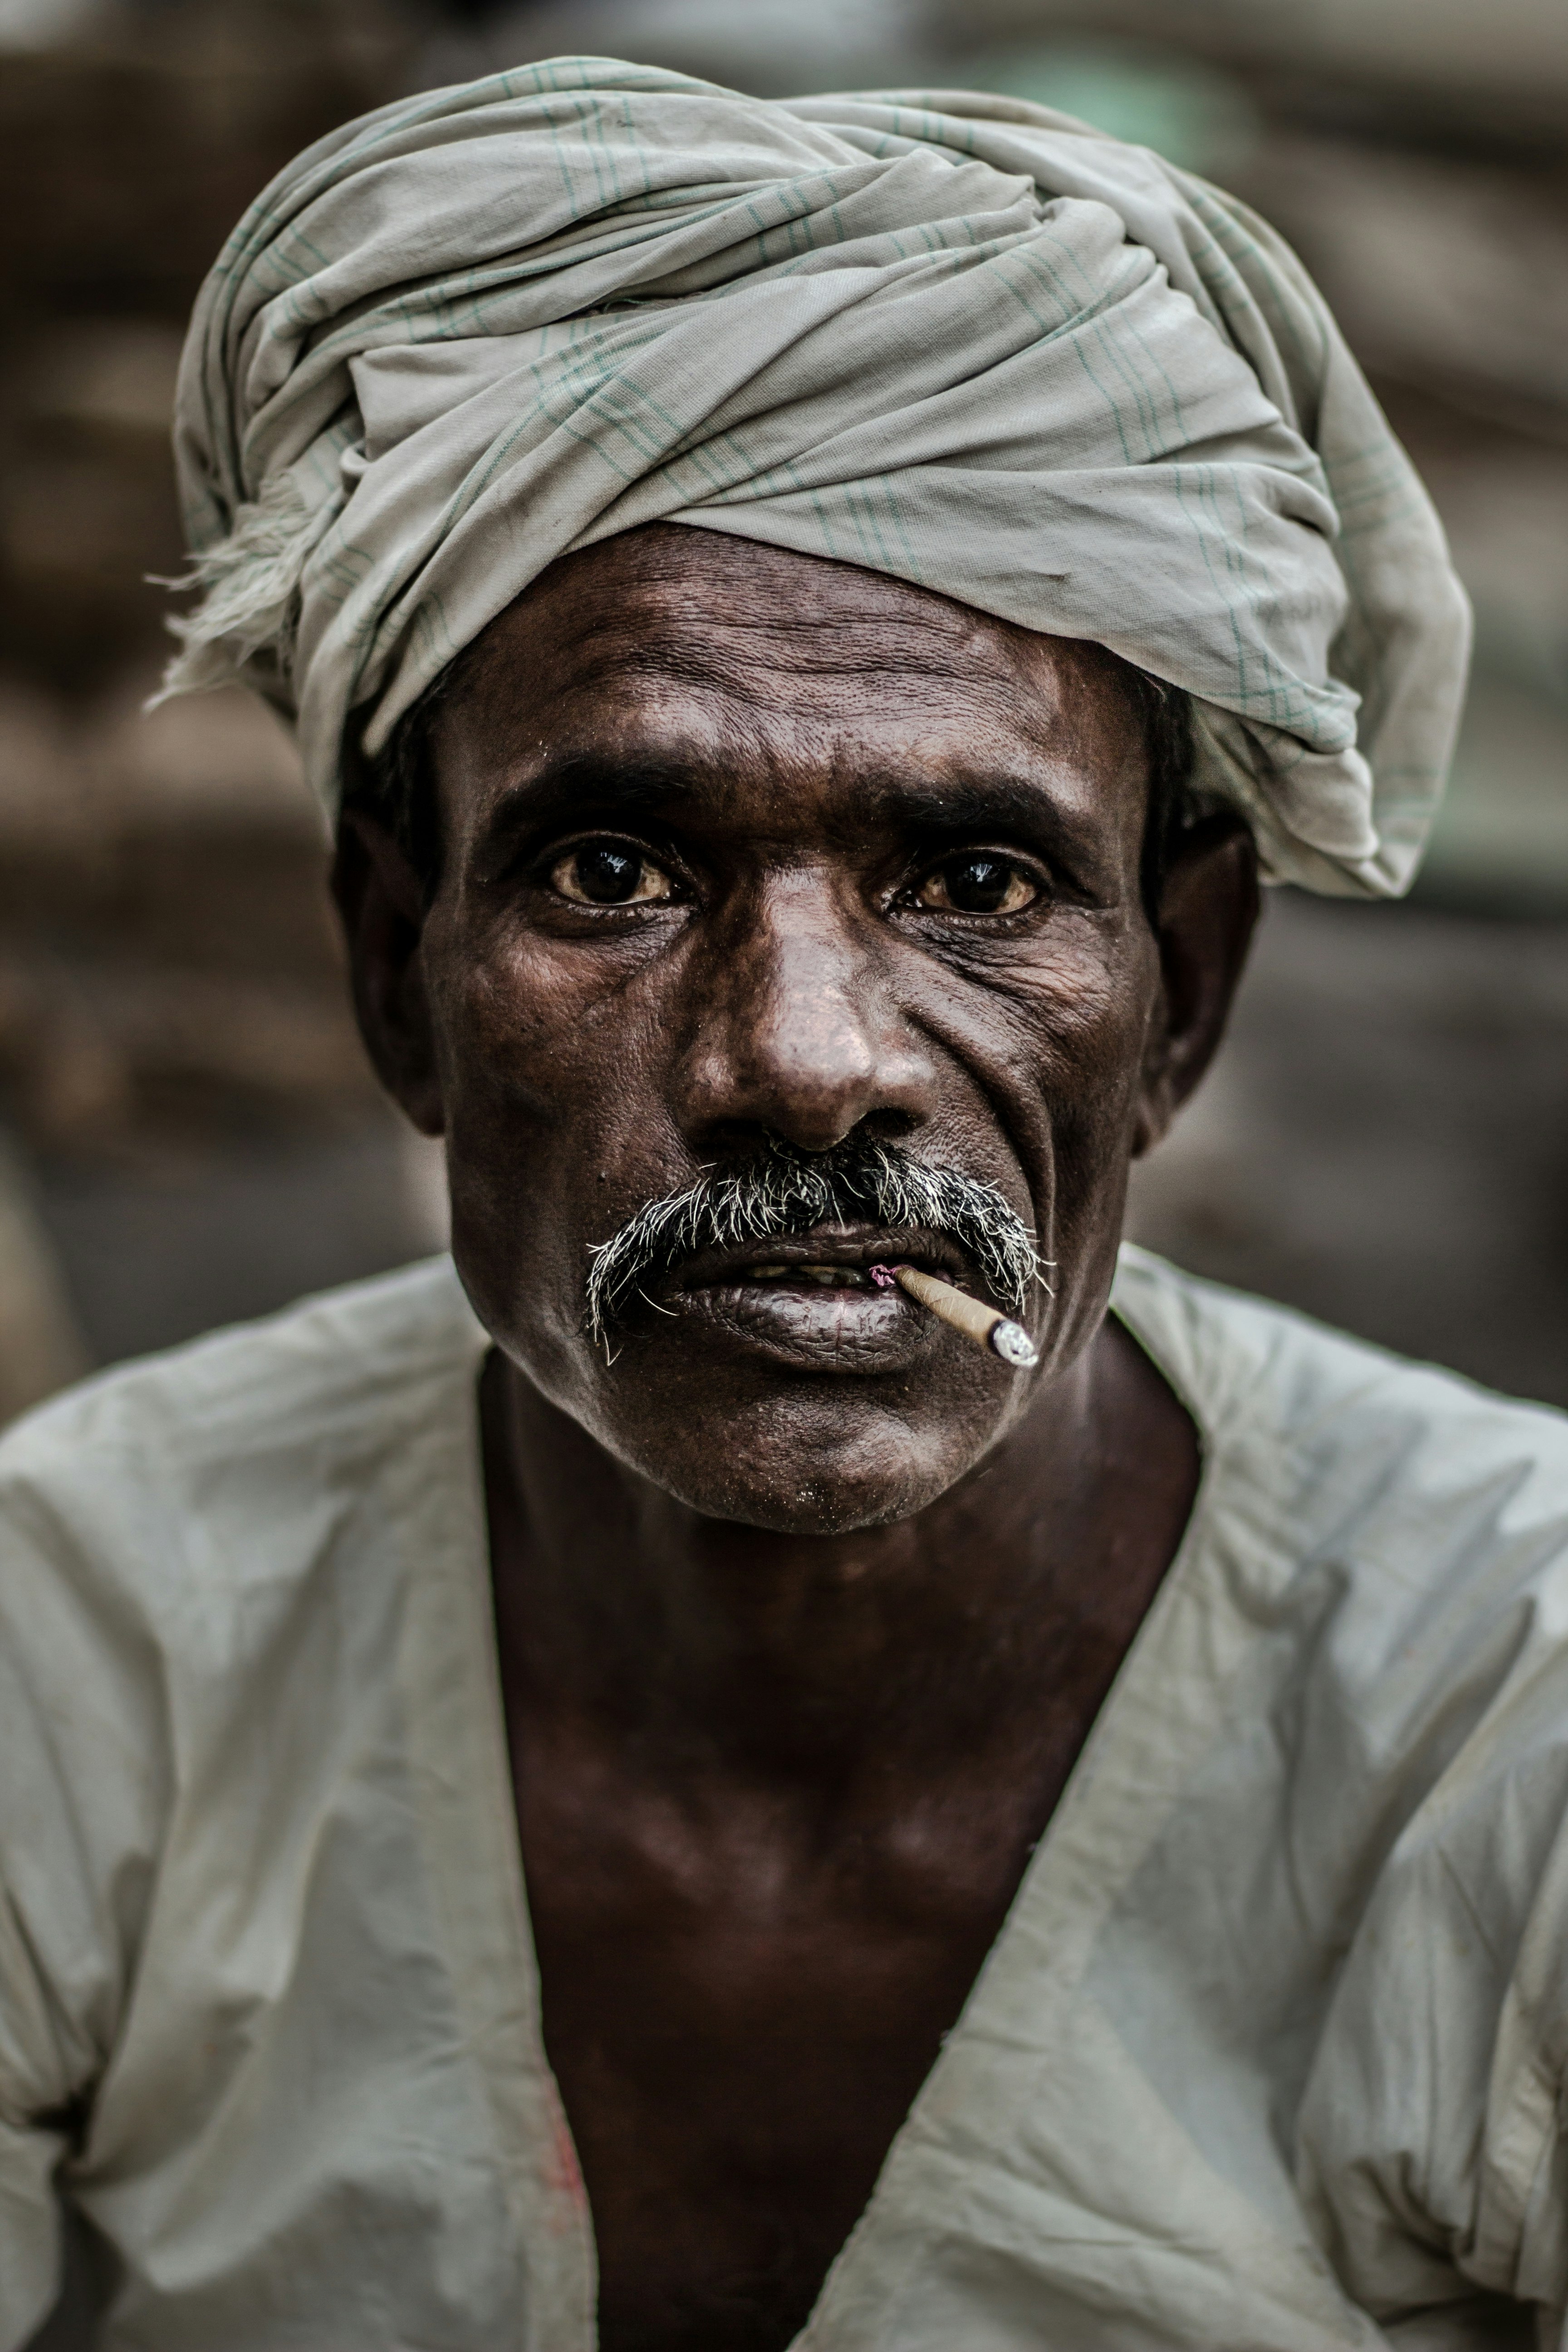 man wearing gray turban smoking cigarette in closeup photography